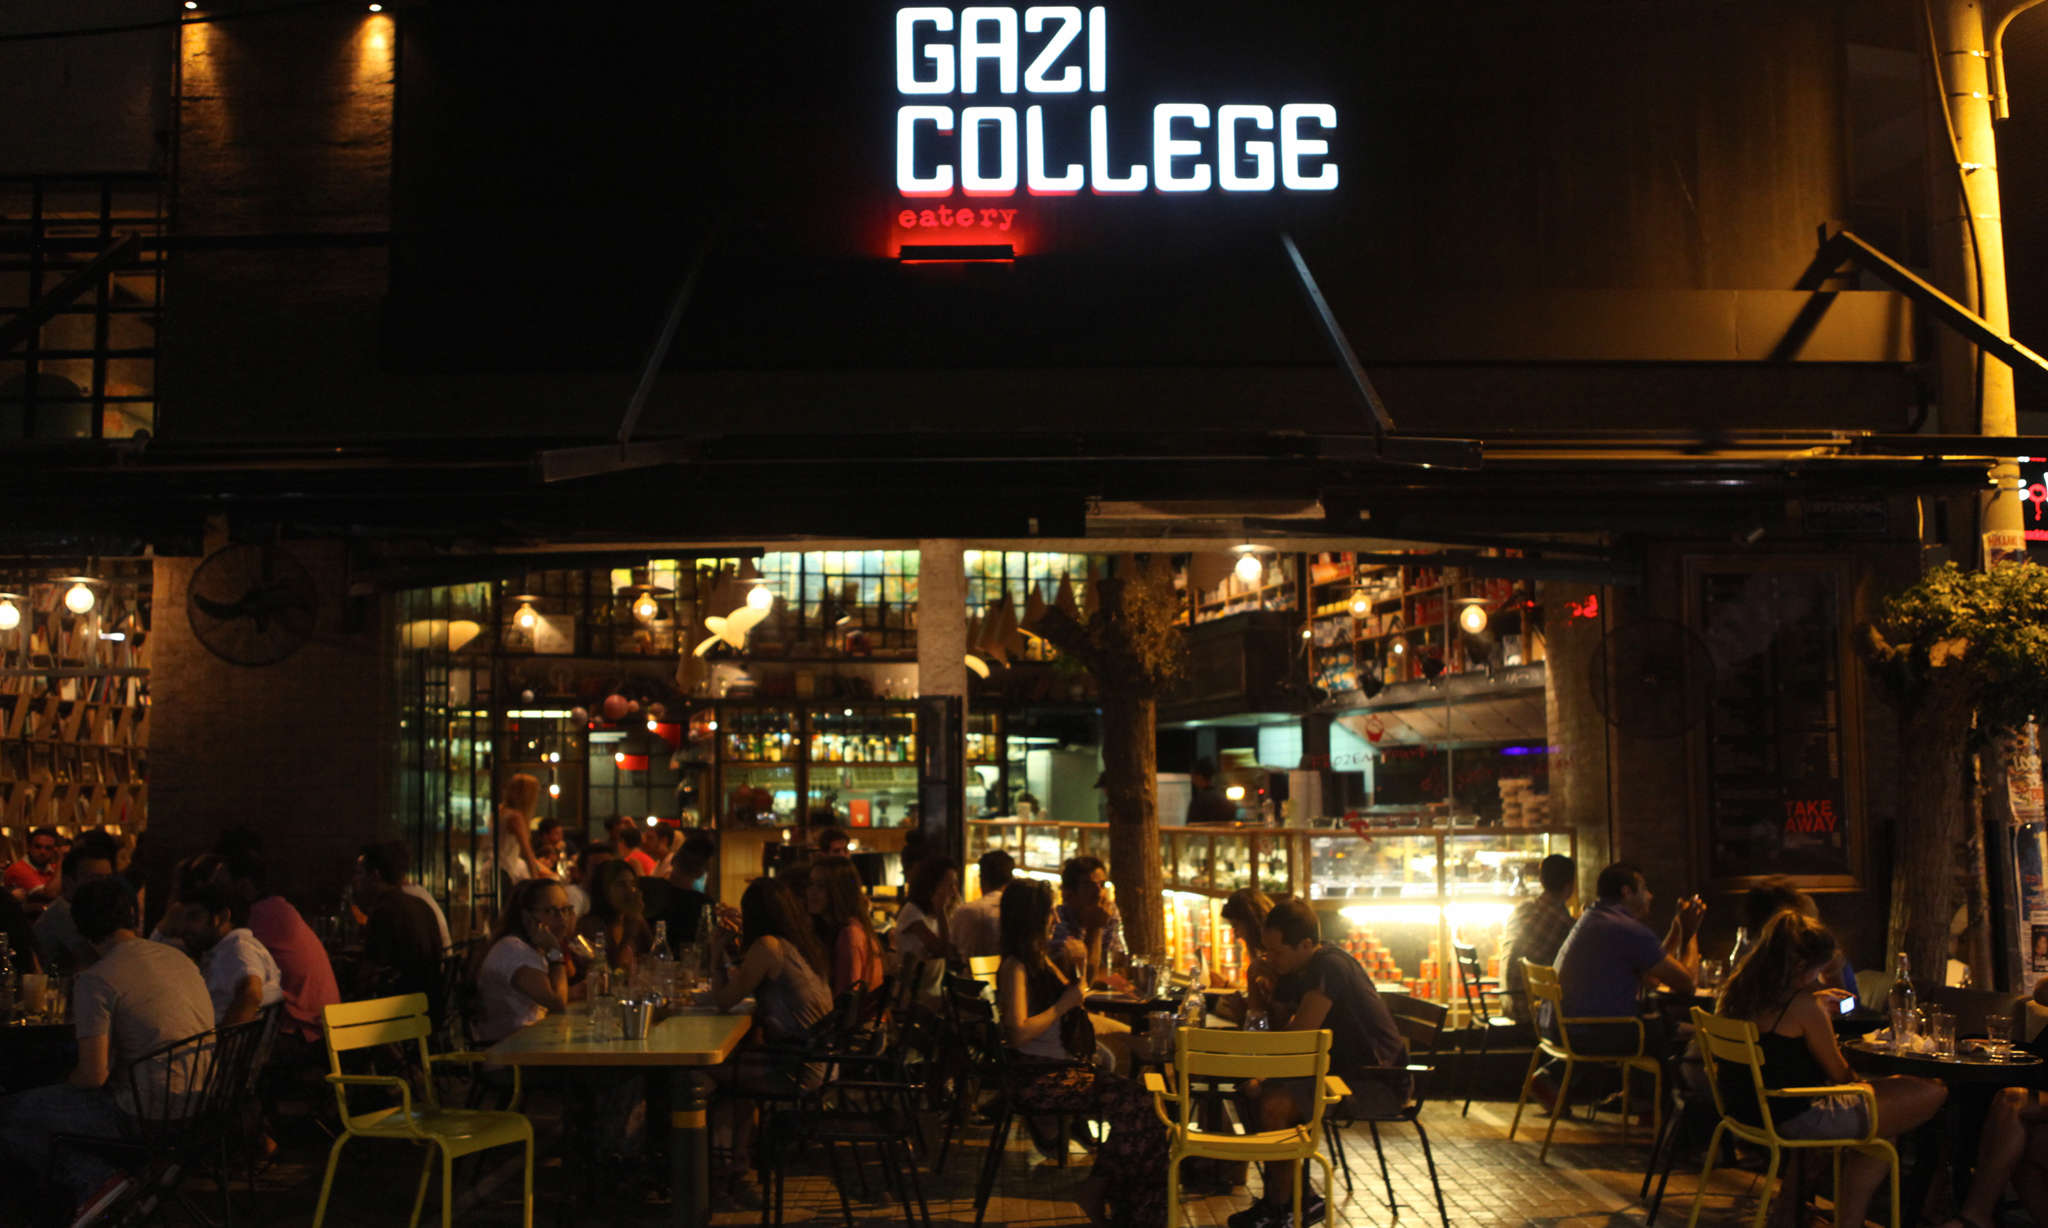 Gazi College